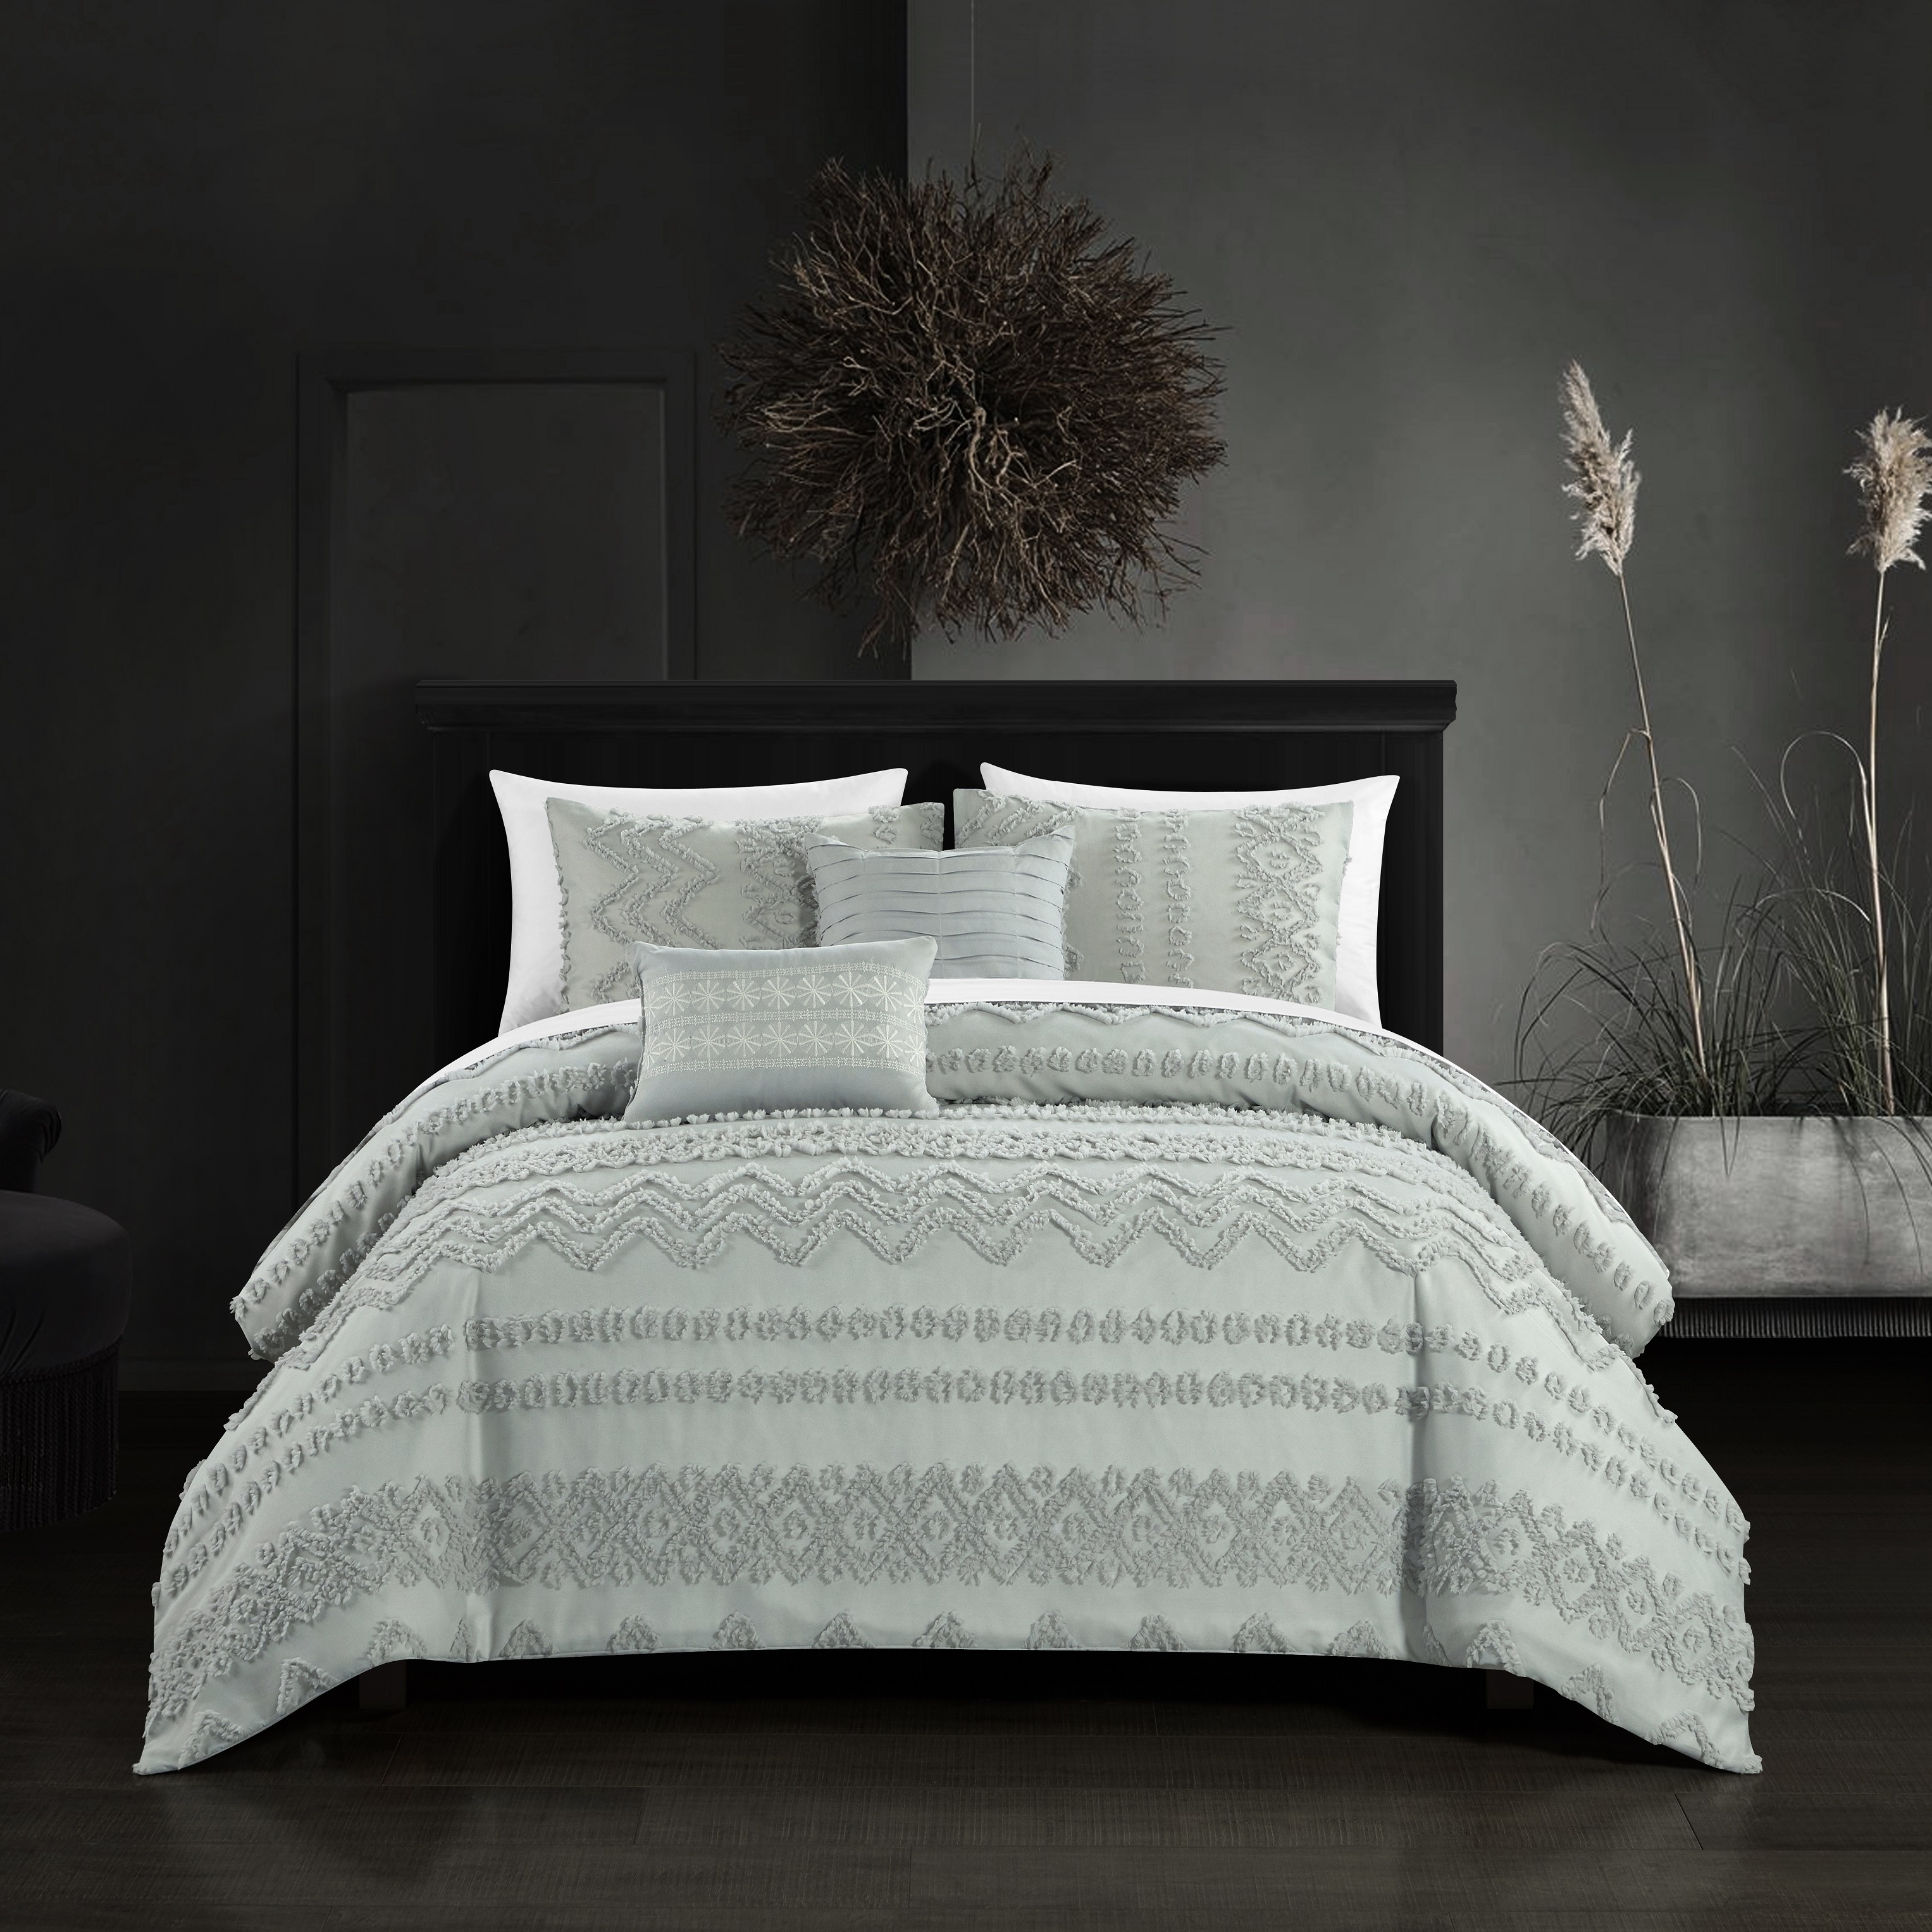 Jenson 5 Piece Comforter Set Jacquard Chevron Geometric Pattern Design Bedding - Grey, Queen